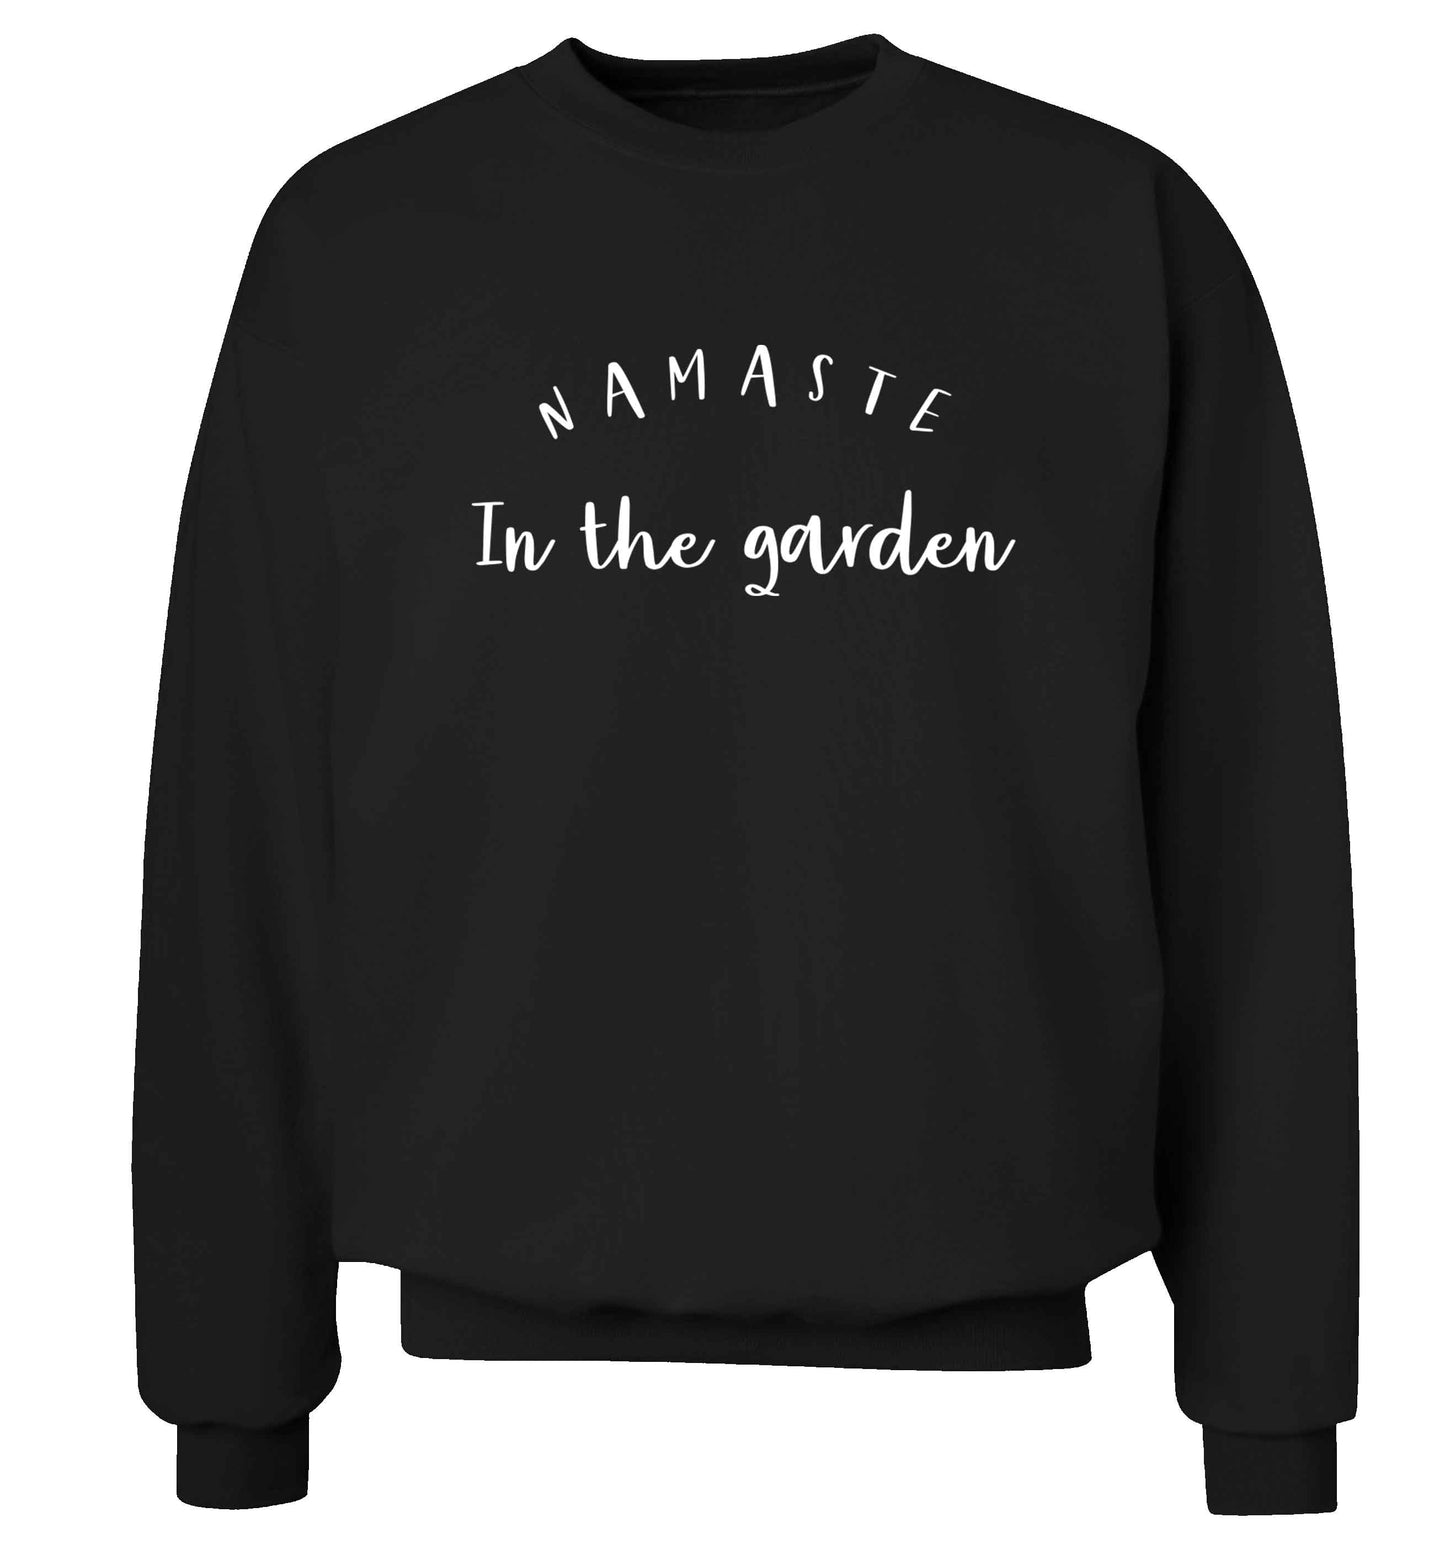 Namaste in the garden Adult's unisex black Sweater 2XL